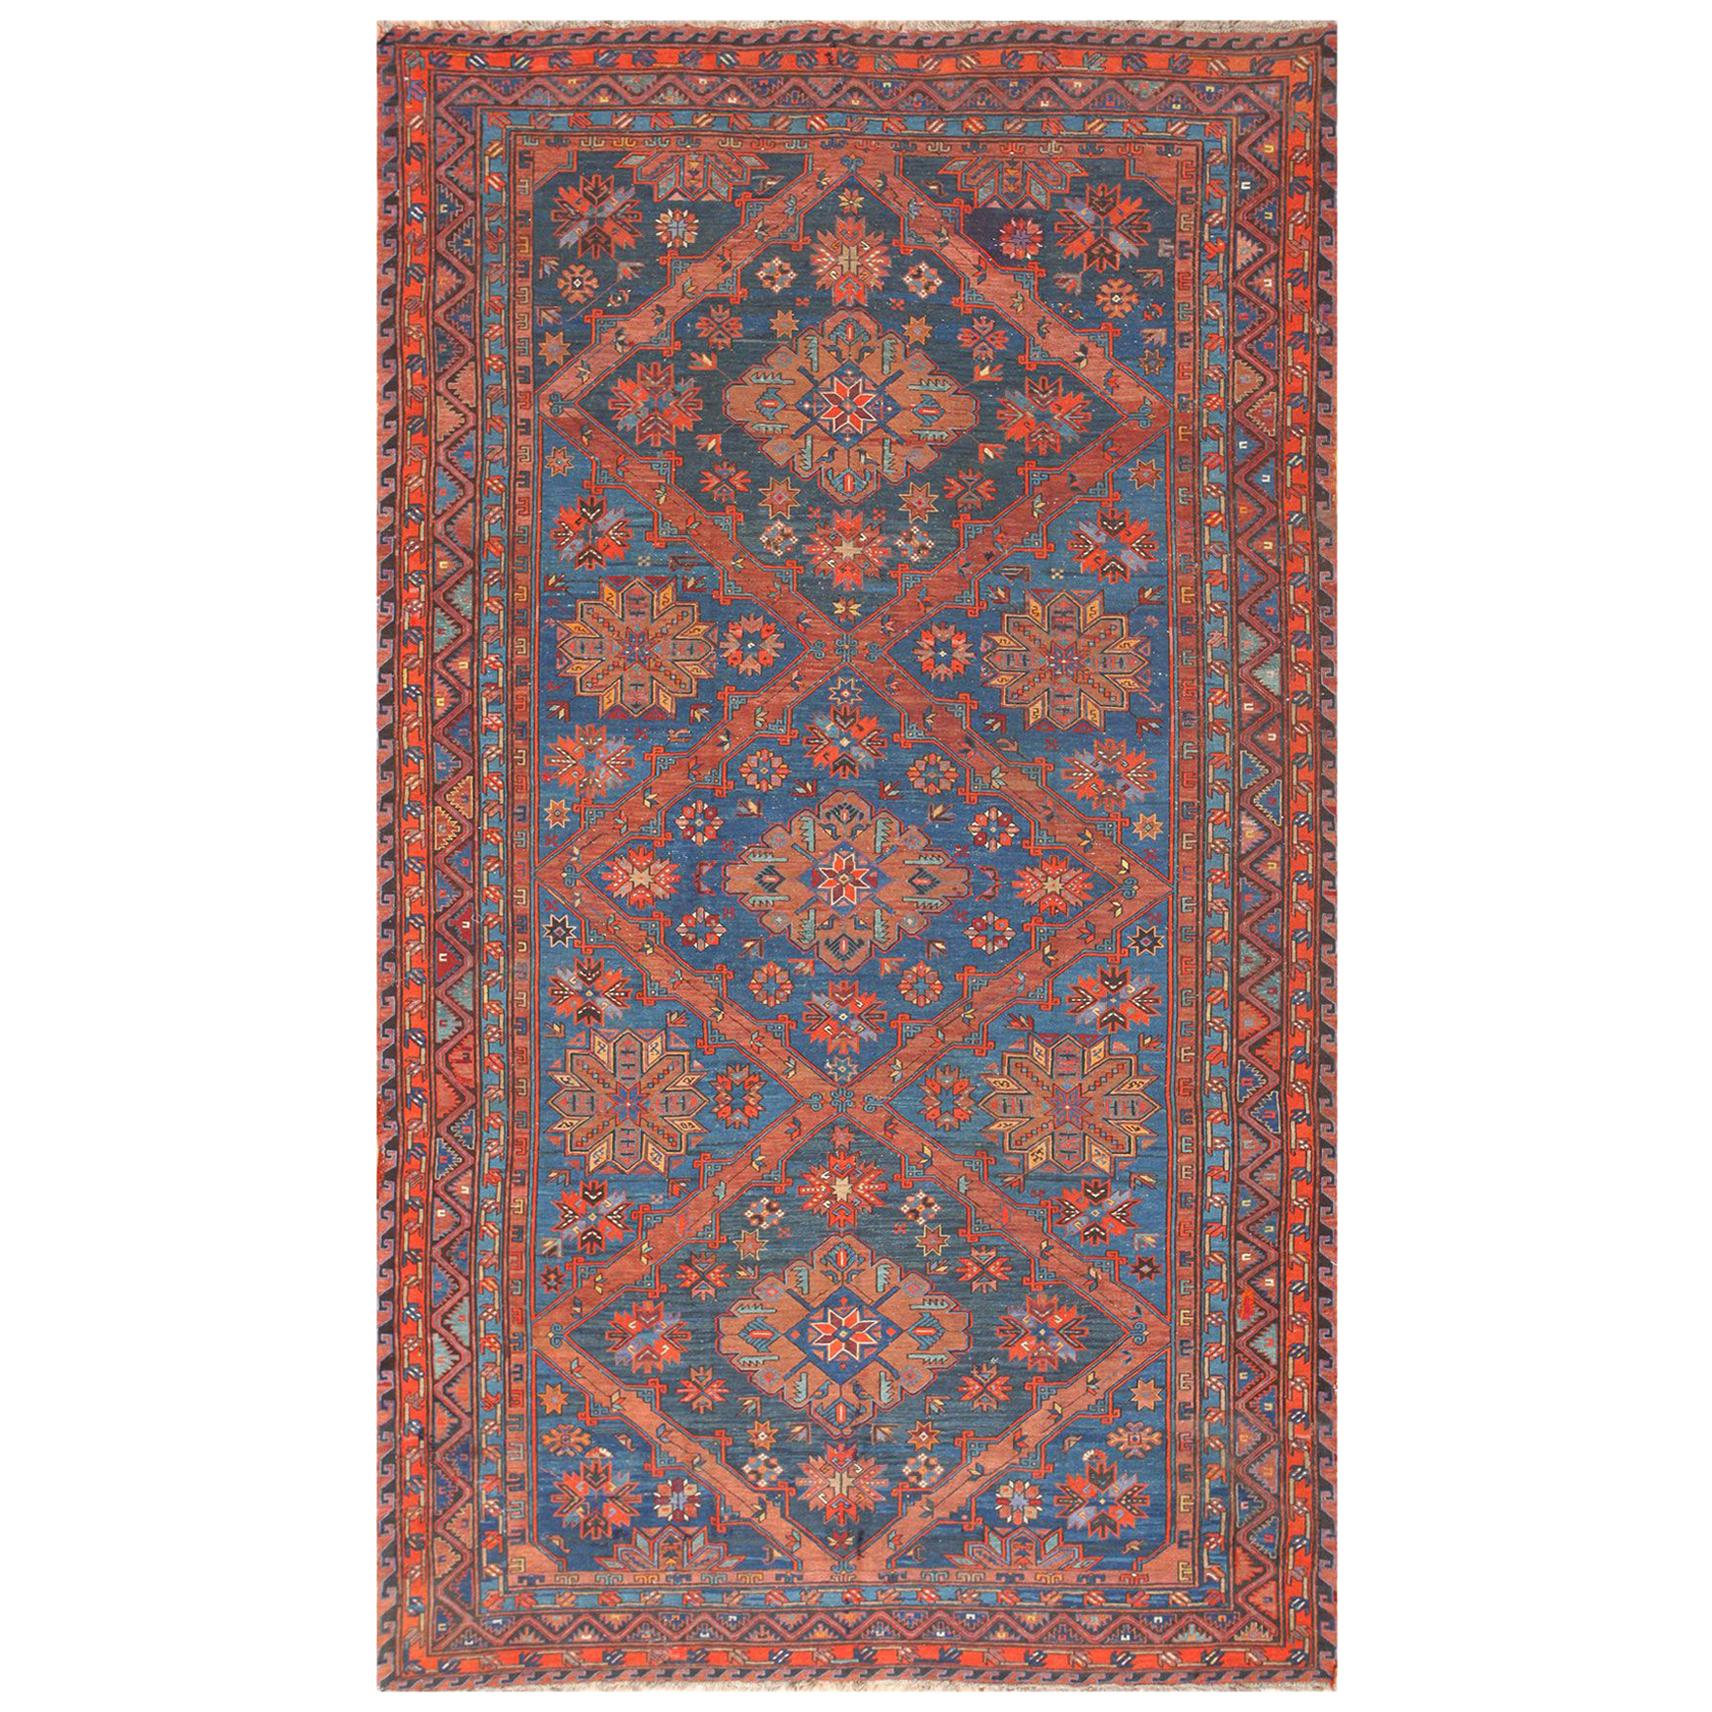 Caucasian Antique Soumak Rug. Size: 6 ft 10 in x 11 ft 7 in (2.08 m x 3.53 m)